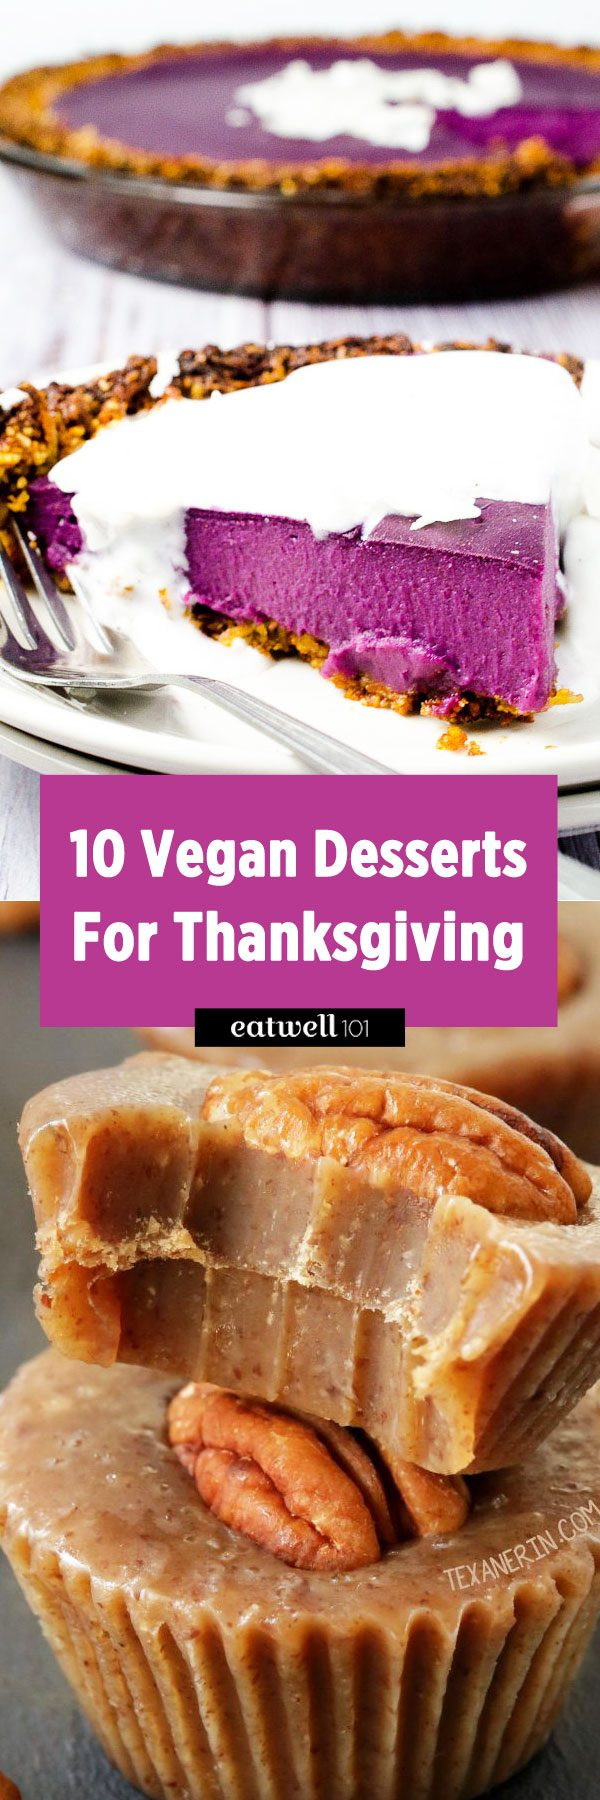 Vegan Thanksgiving Dessert
 Vegan Thanksgiving Desserts Recipes — Eatwell101